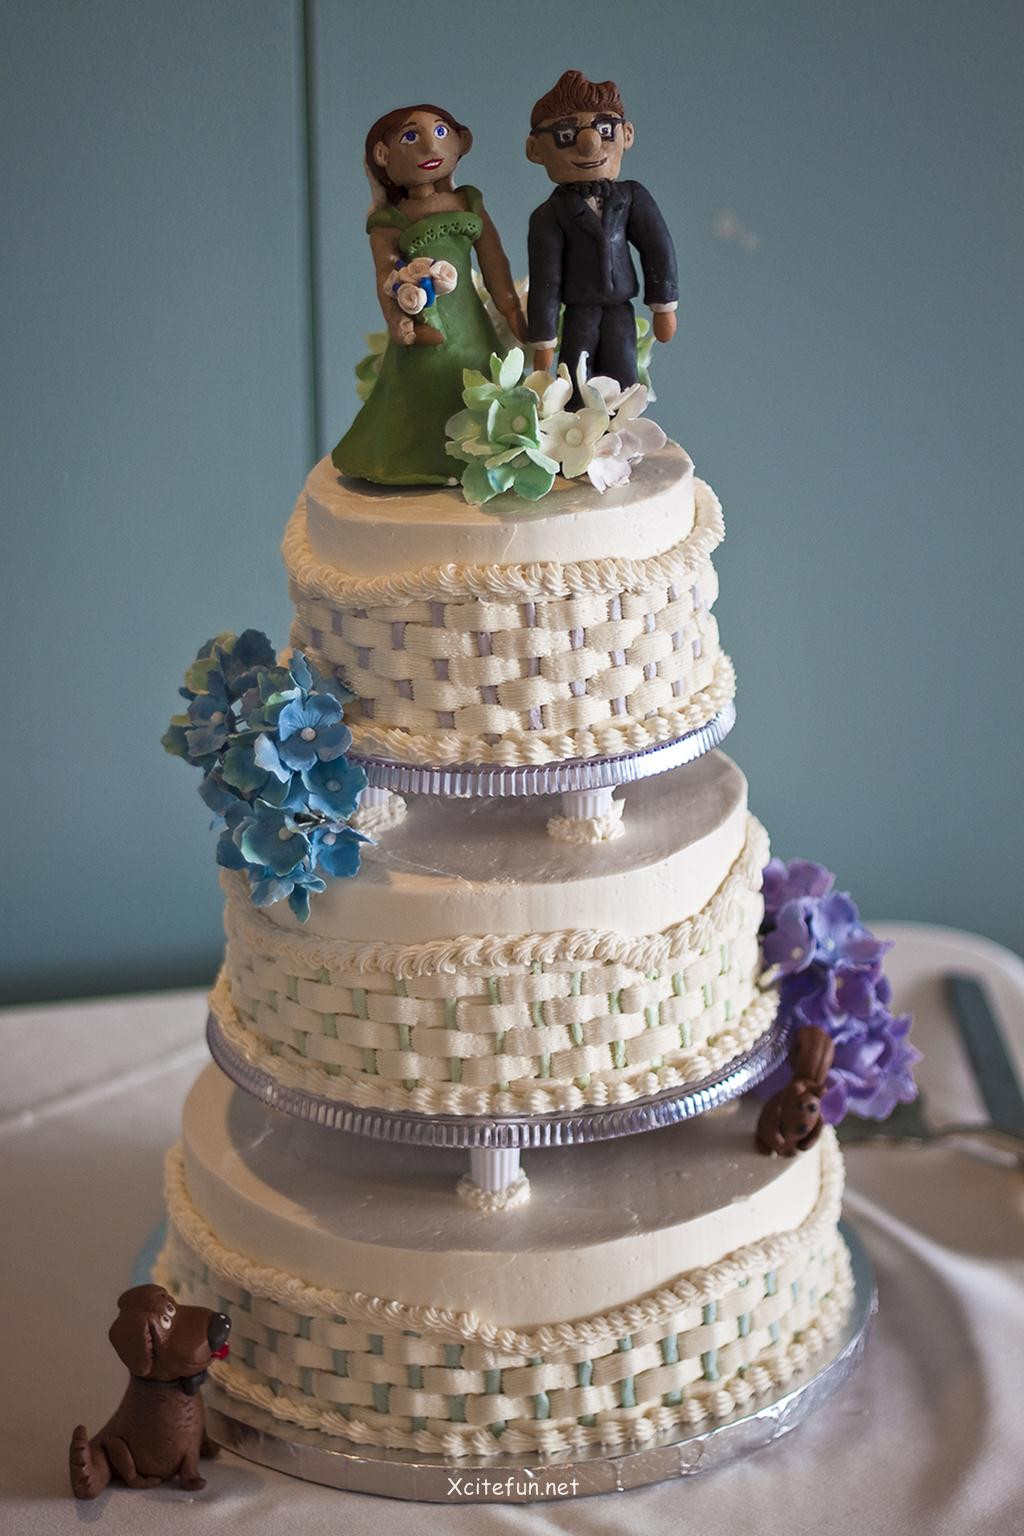 Wedding Cake Decorating Ideas
 Wedding Cakes Decorating Ideas XciteFun